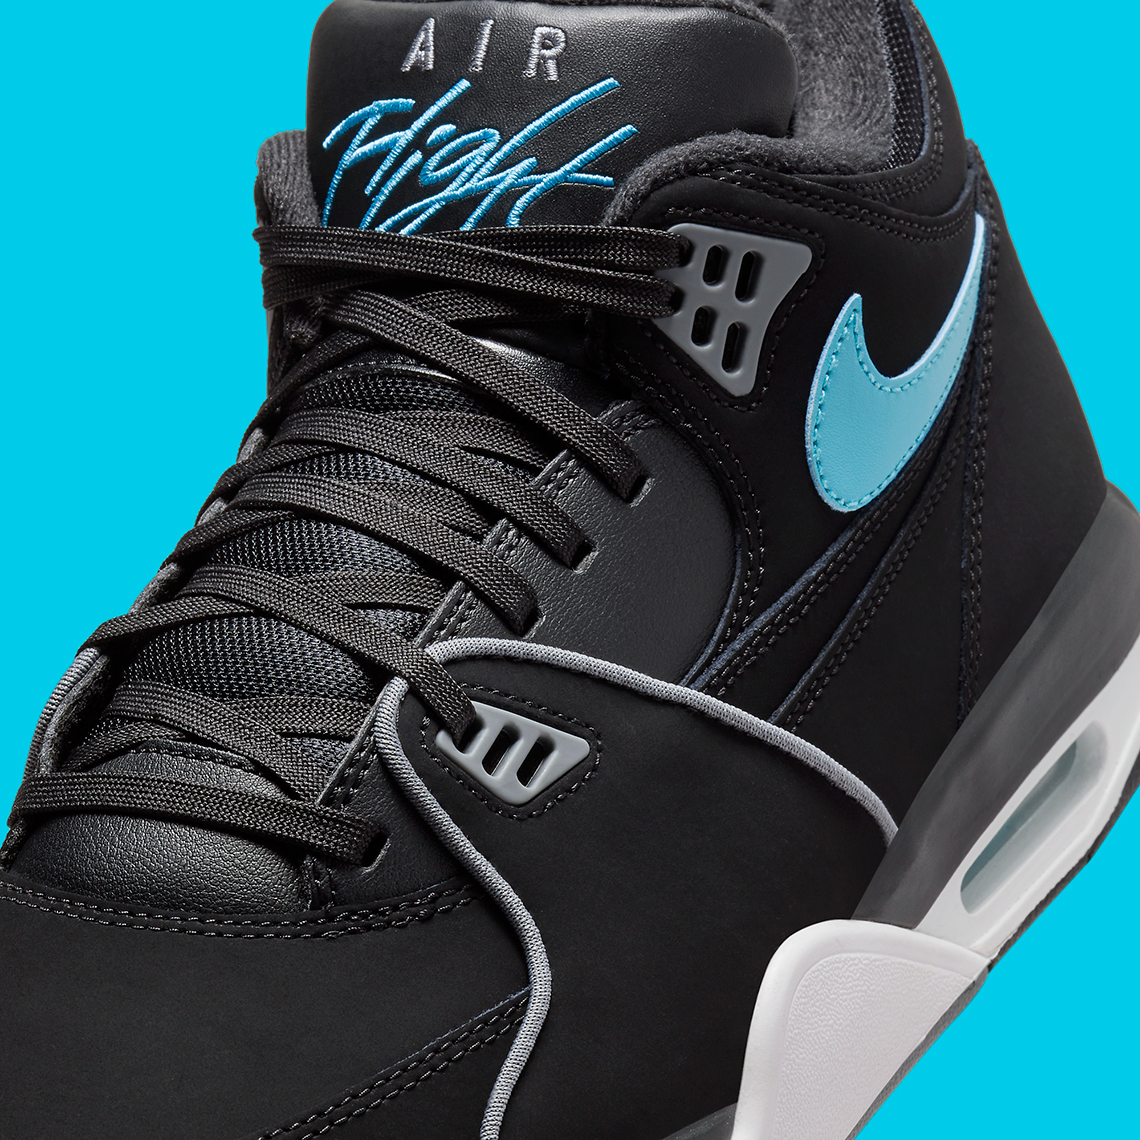 Nike custom nike air dunk shoes clearance boots amazon Black Blue Hf0102 001 1